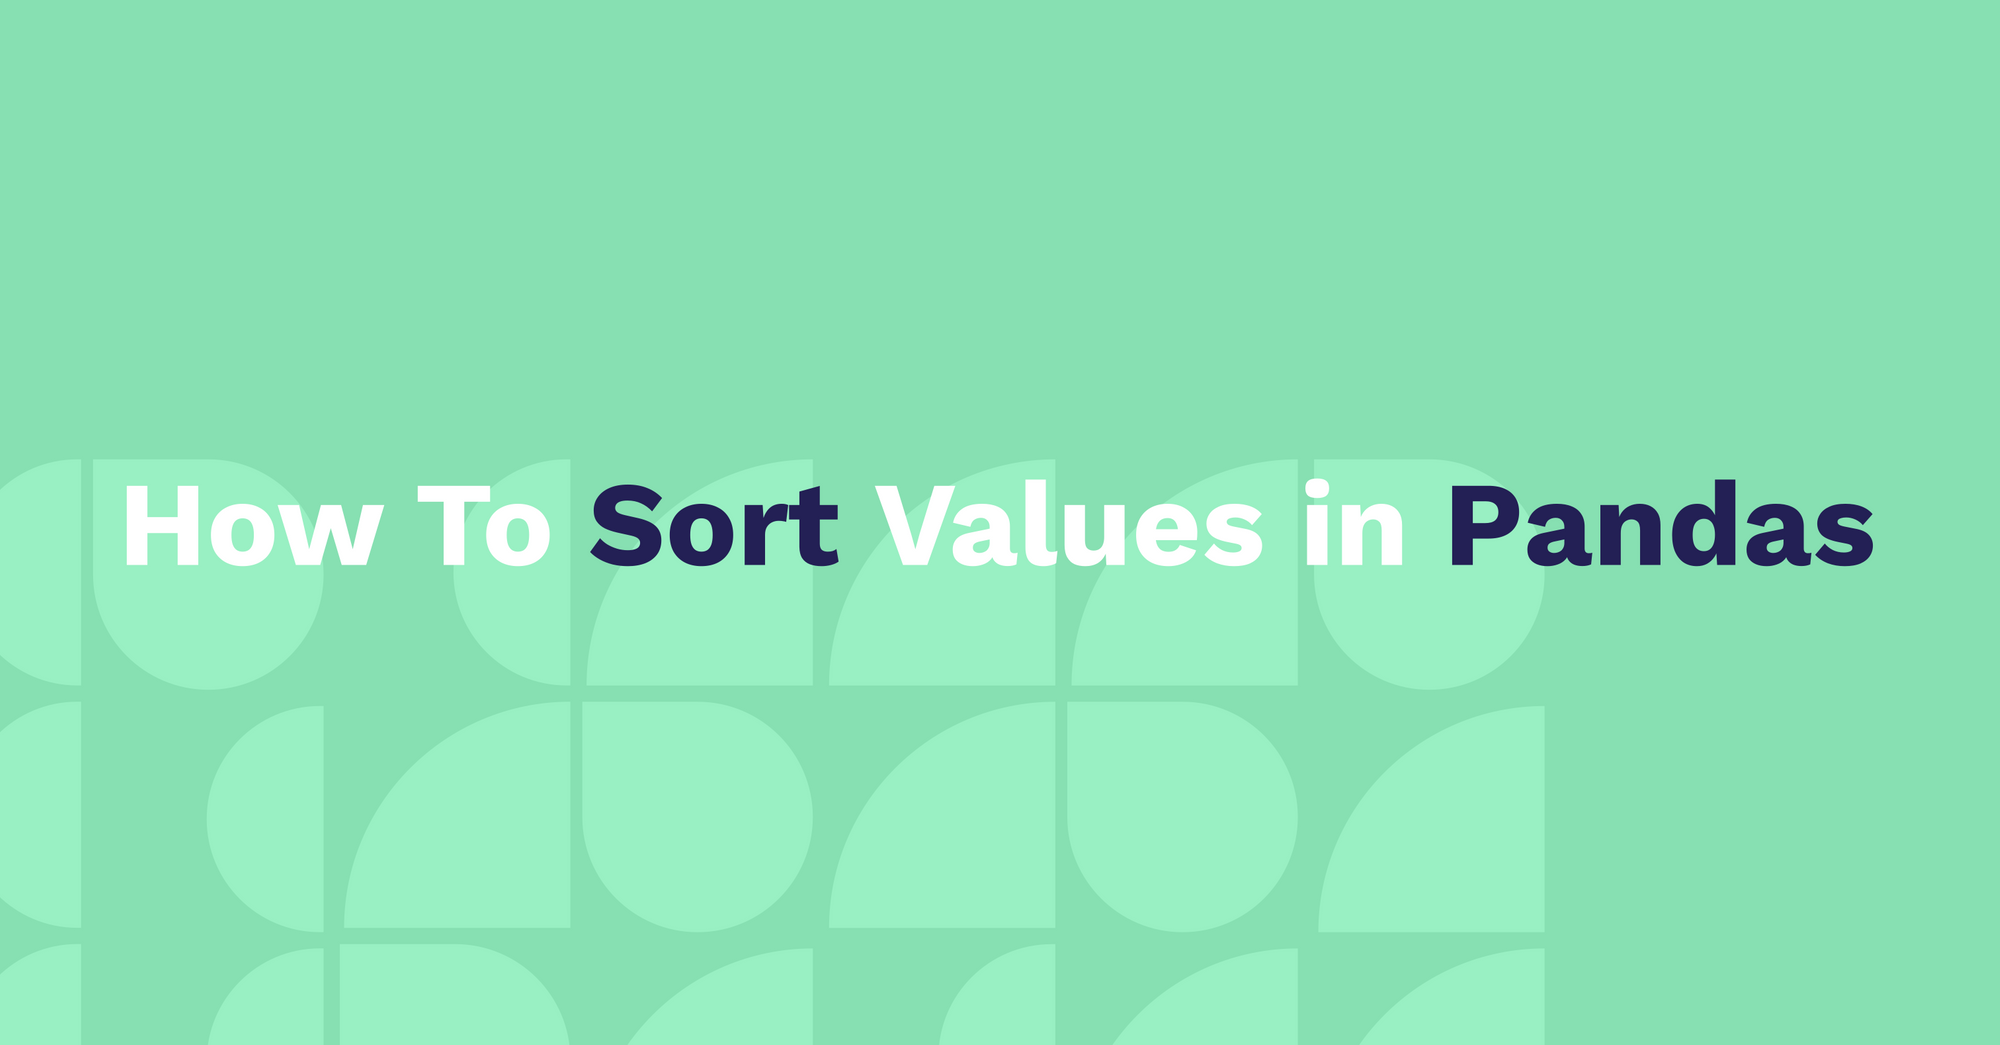 pandas.DataFrame.sort_values – How To Sort Values in Pandas